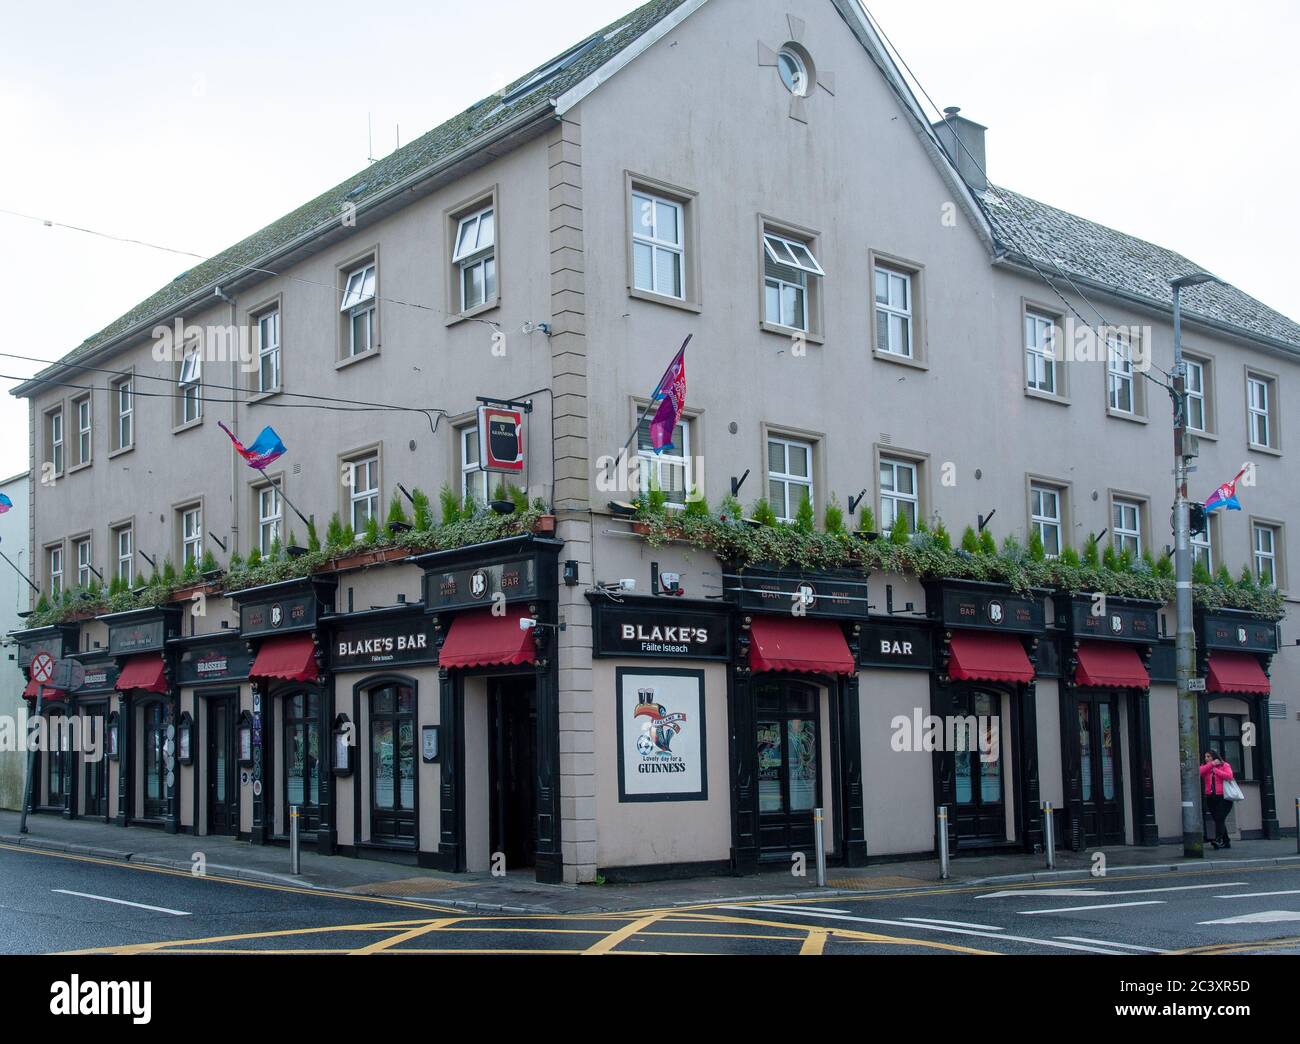 Galway, Irland - 9. Februar 2020. Blick auf die Blake's Corner Bar in Galway Stockfoto